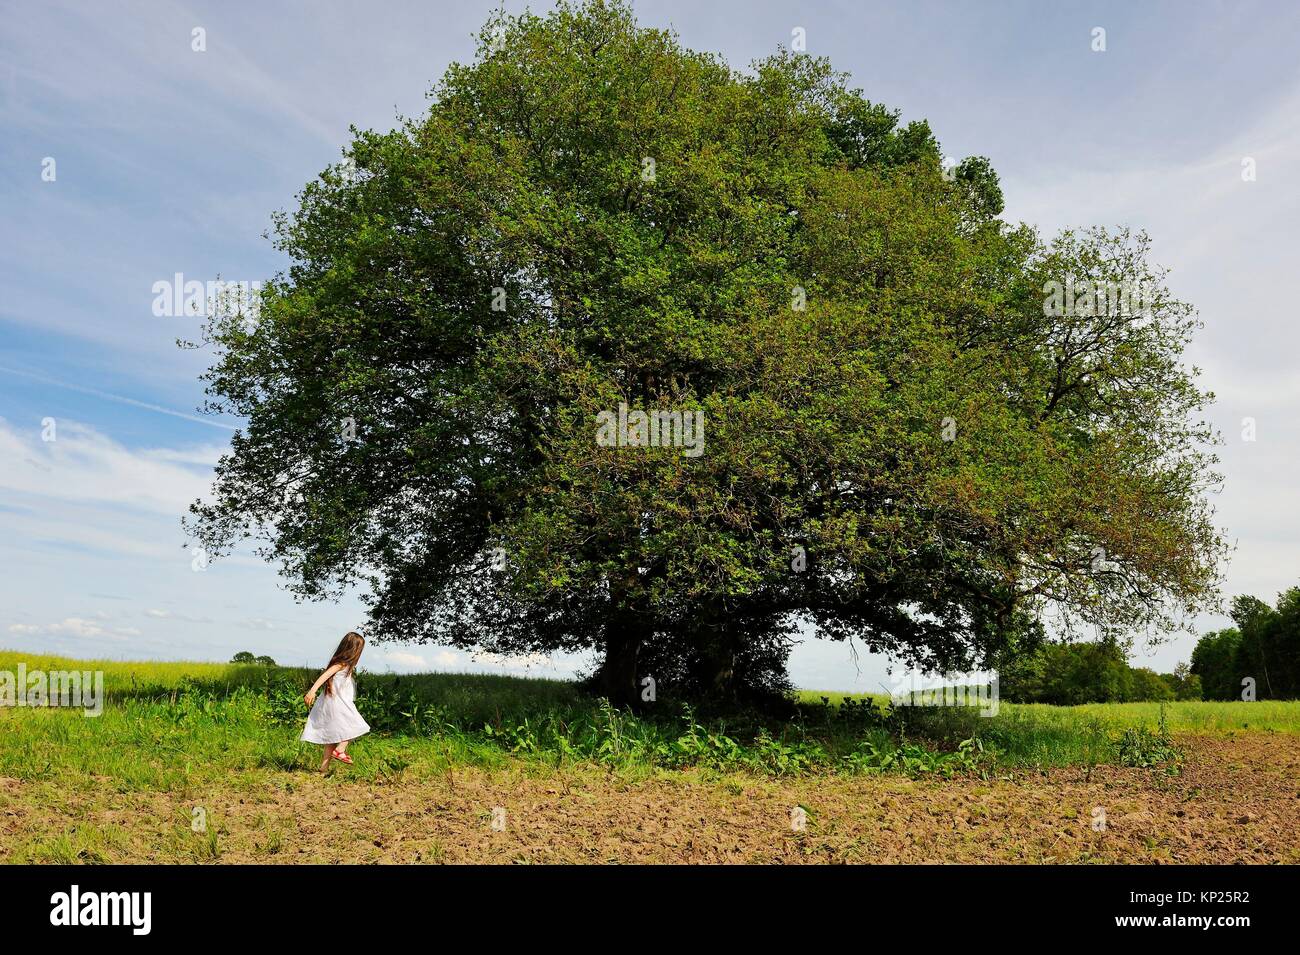 little girl dressed in white in front of a large oak tree, Centre-Val de Loire region, France, Europe. Stock Photo